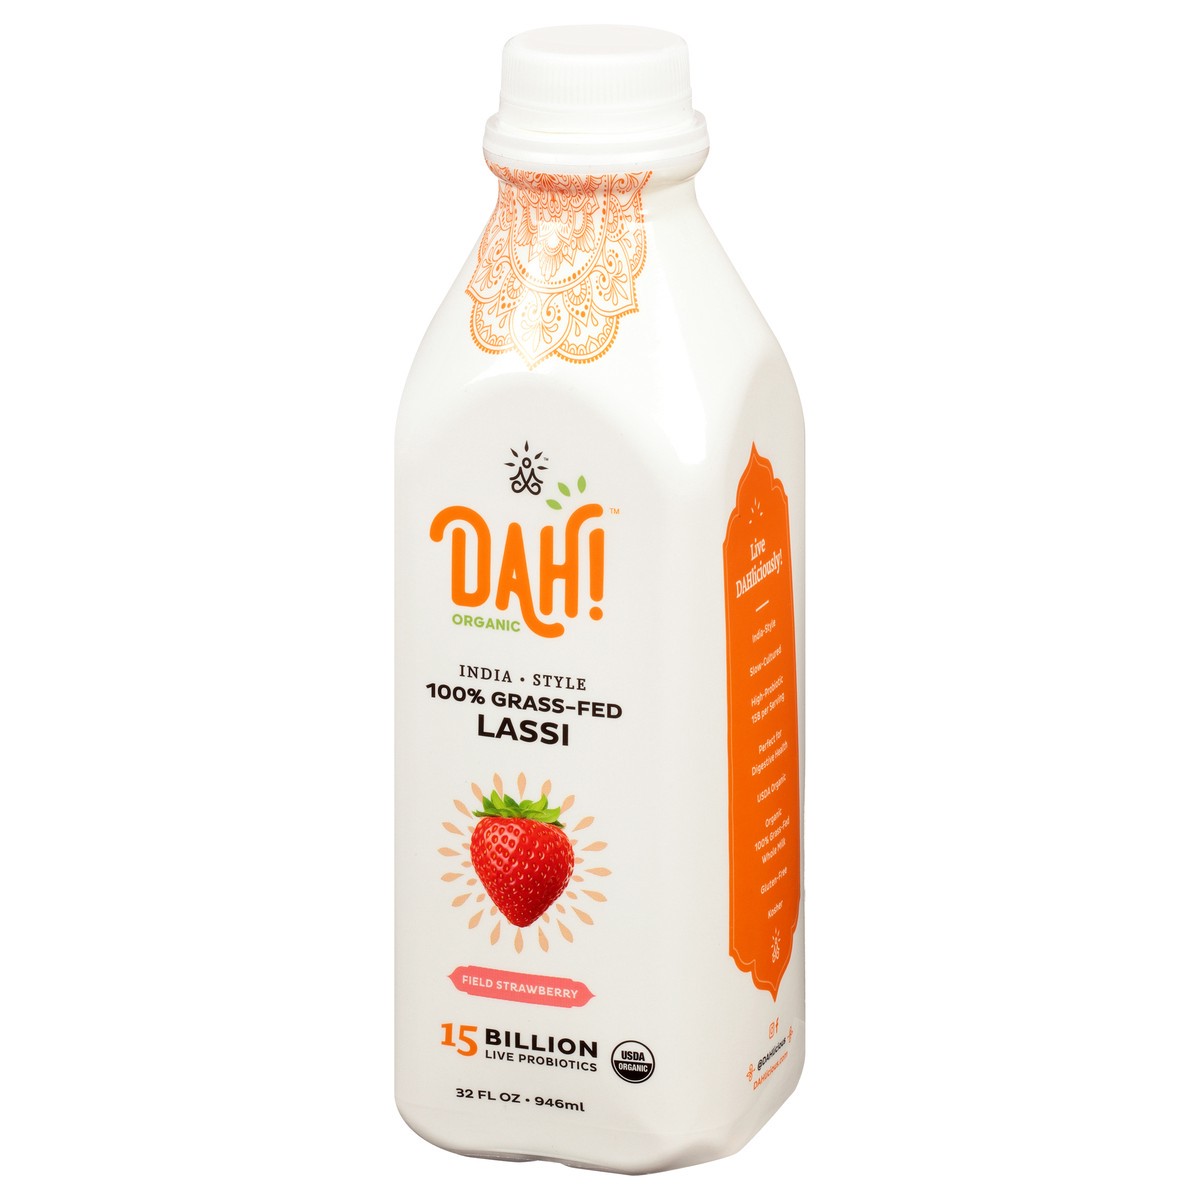 slide 7 of 13, Dahlicious DAH!™ organic lassi, field strawberry, 32 fl oz